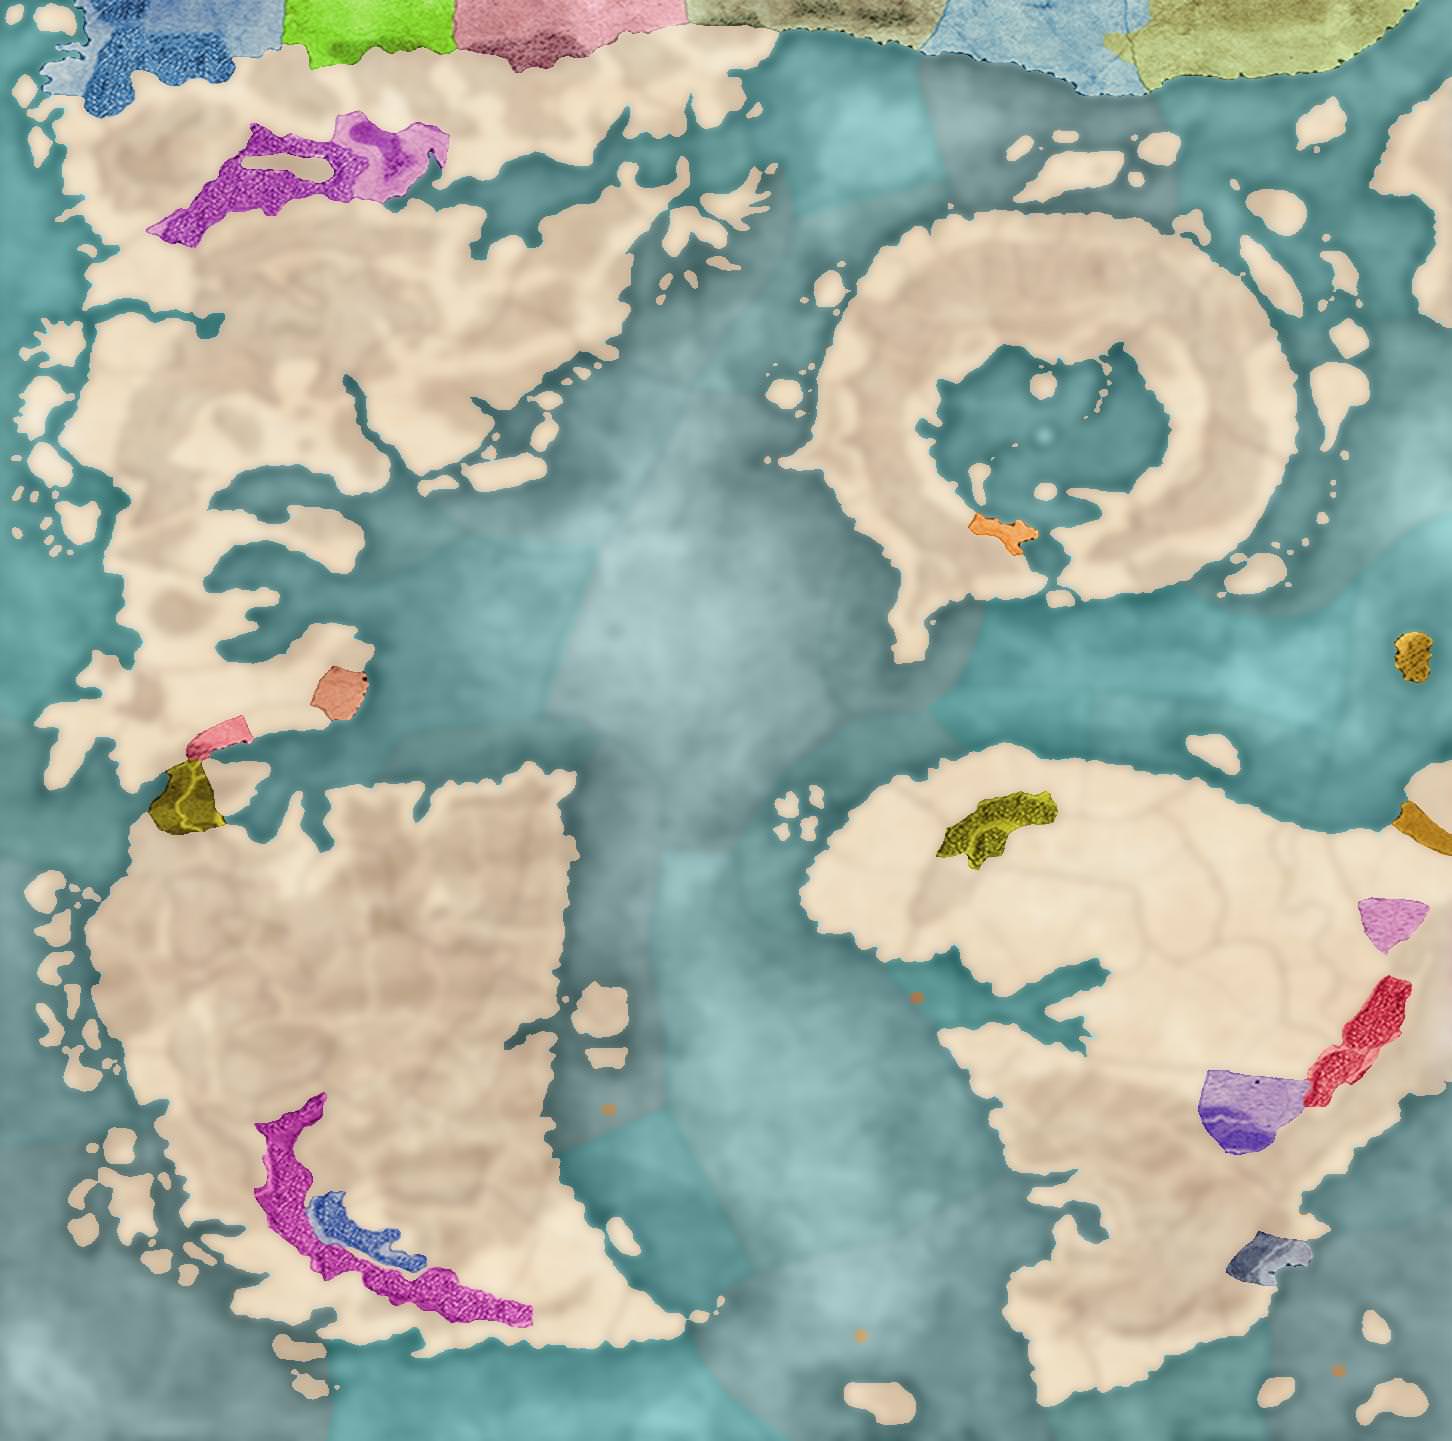 warhammer total war 2 combined map